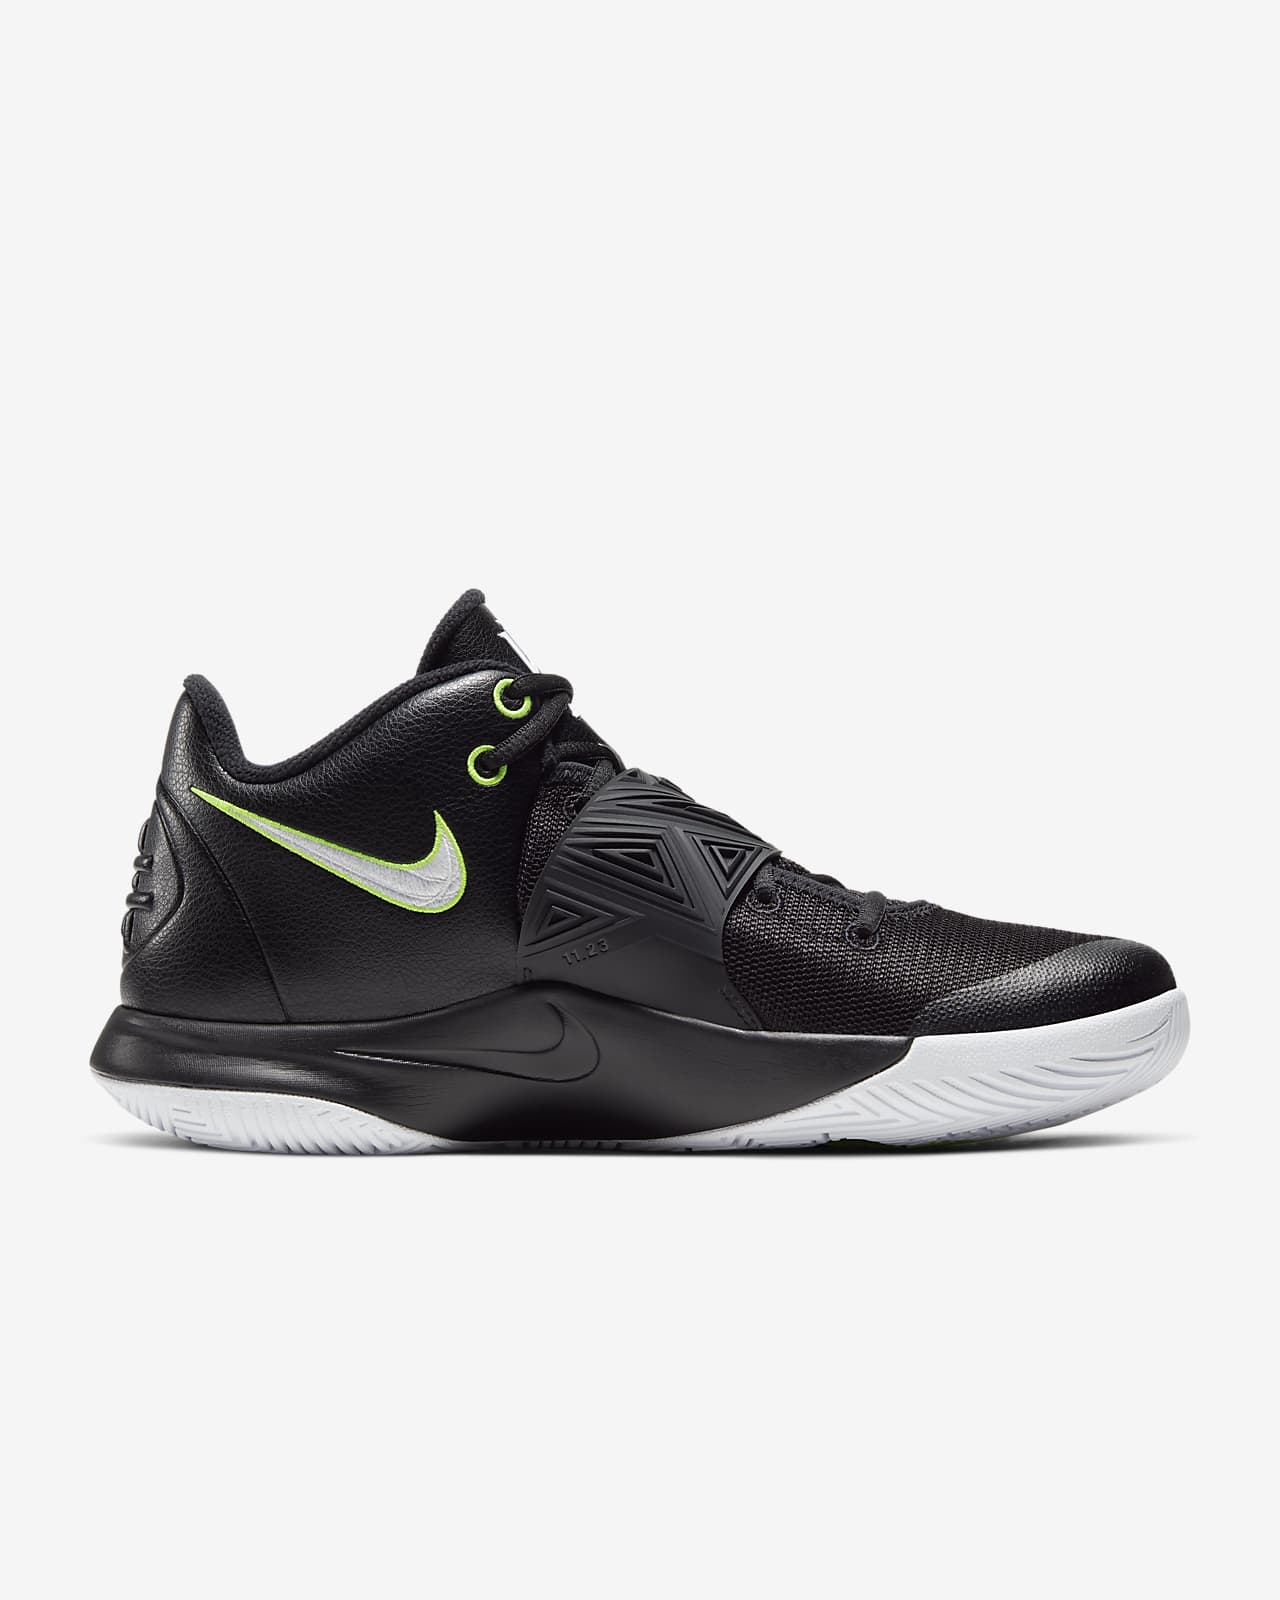 Kyrie Flytrap 3 Basketball Shoe. Nike AU